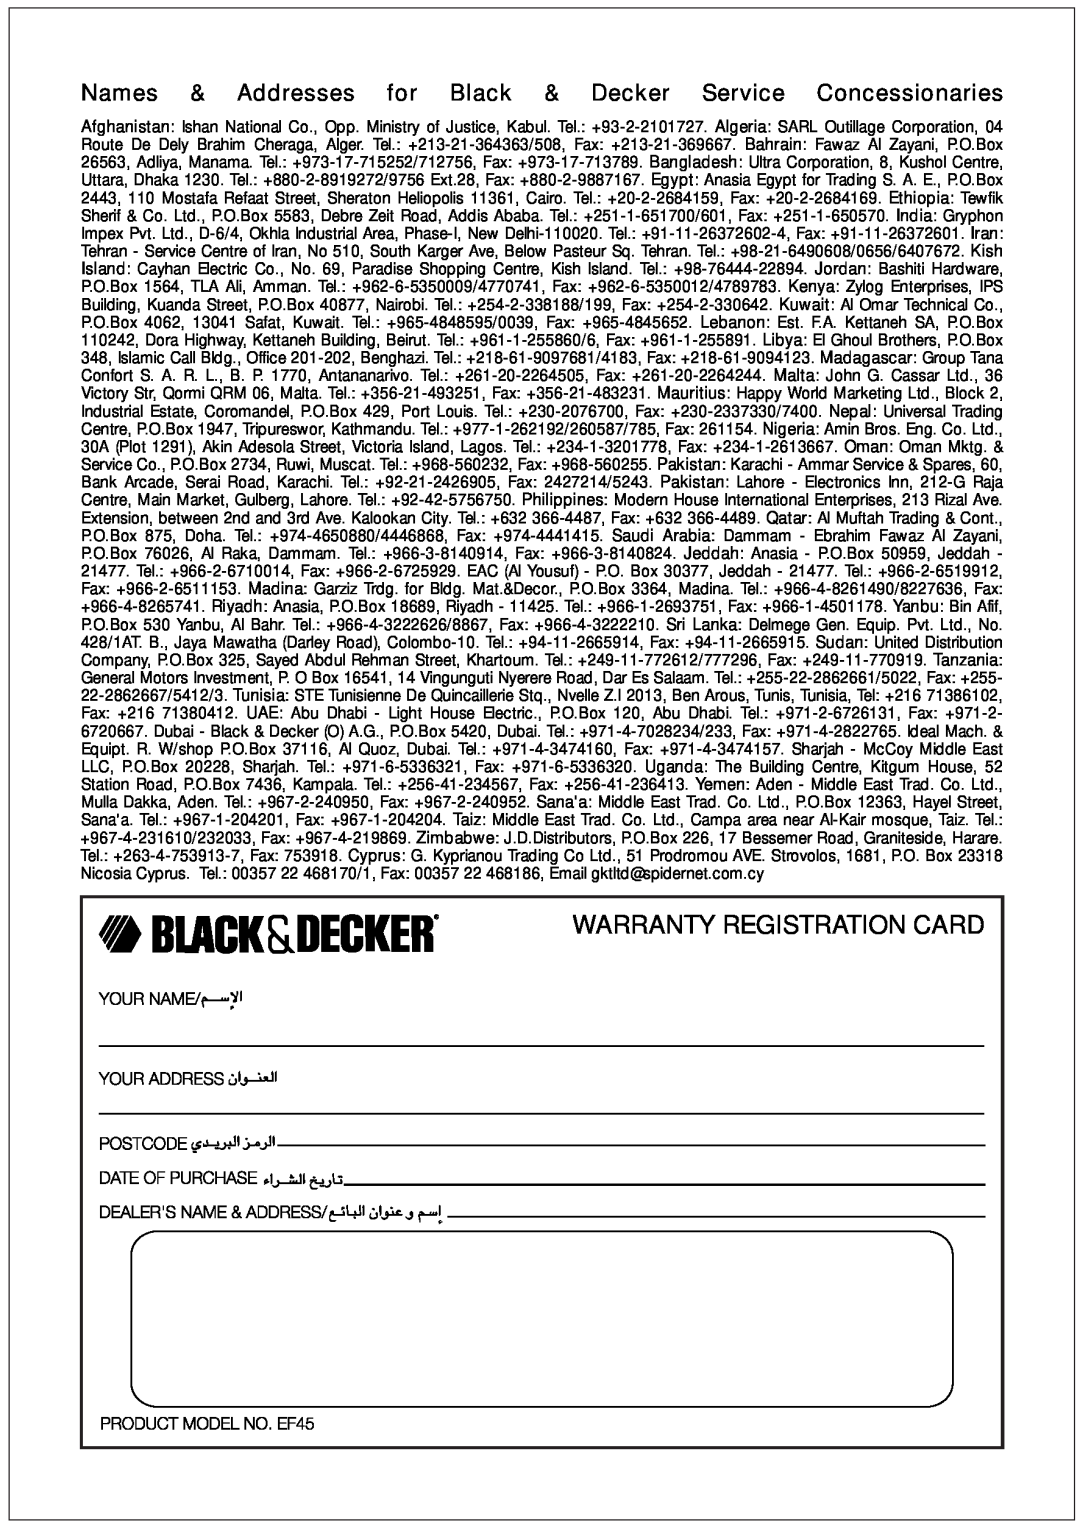 Black & Decker EF45 manual Warranty Registration Card 